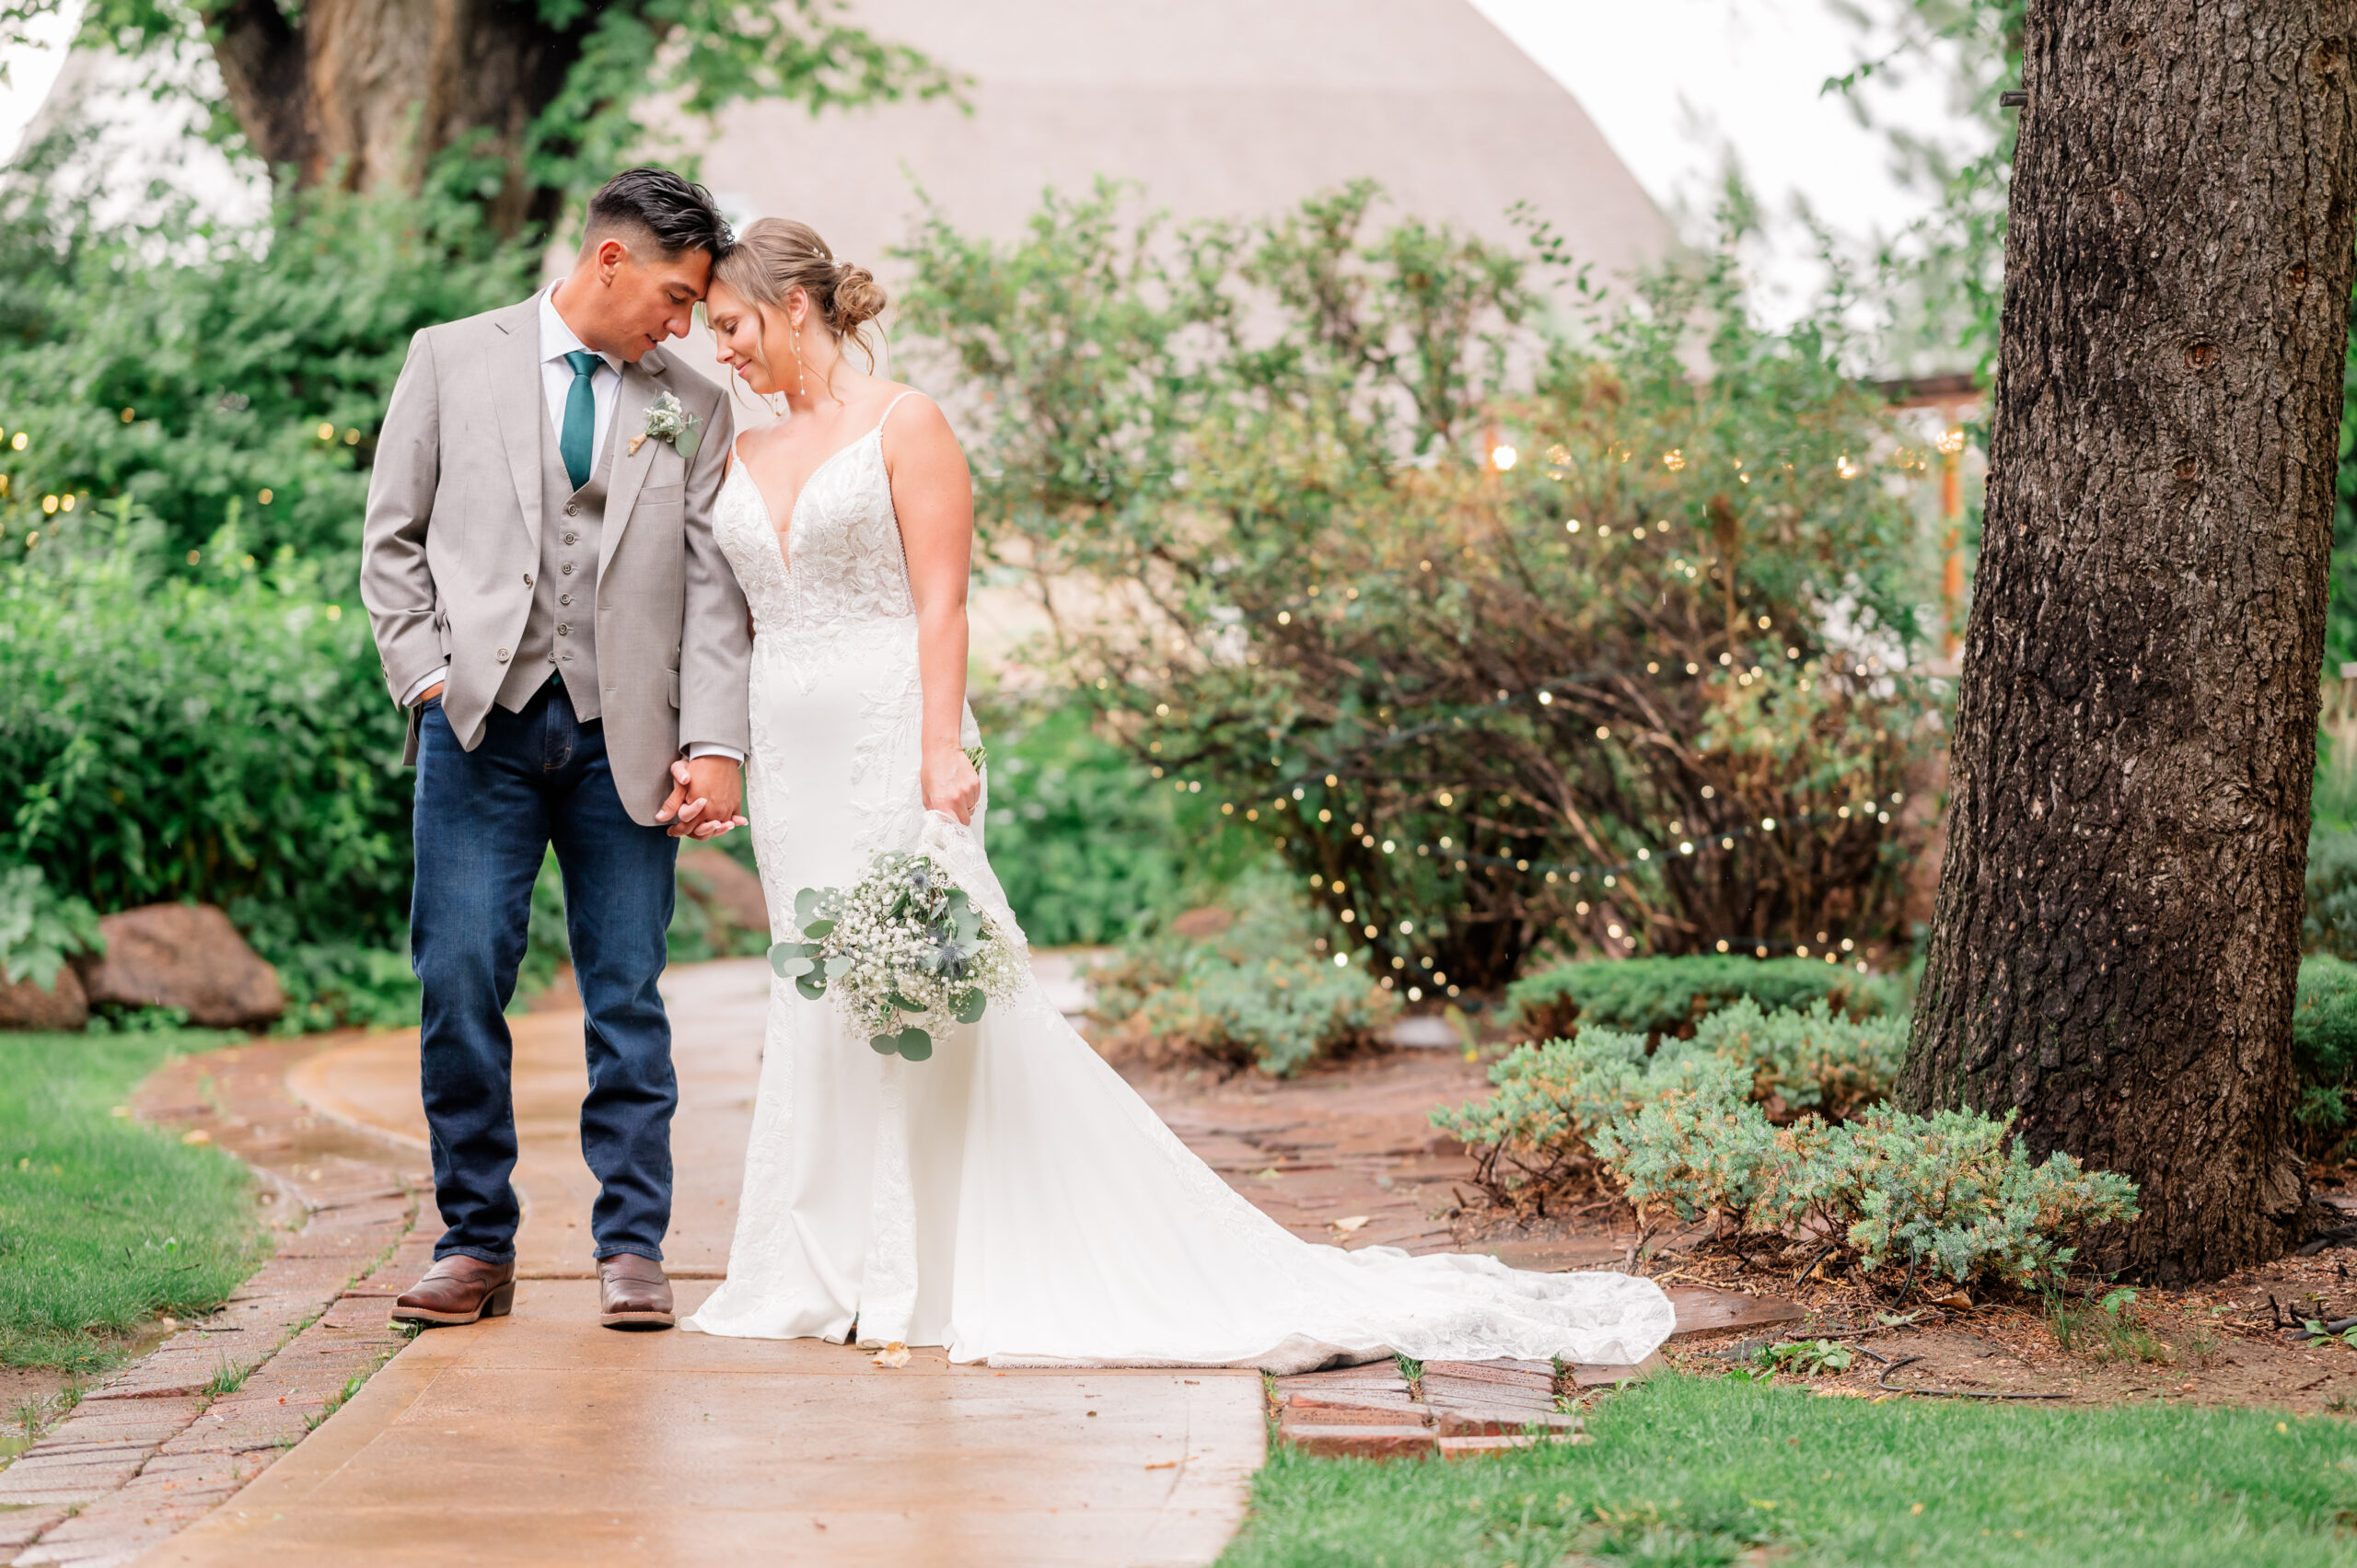 Emilee + Nathan Wedding - Britni Girard Photography - Colorado Wedding Photographer and Videographer